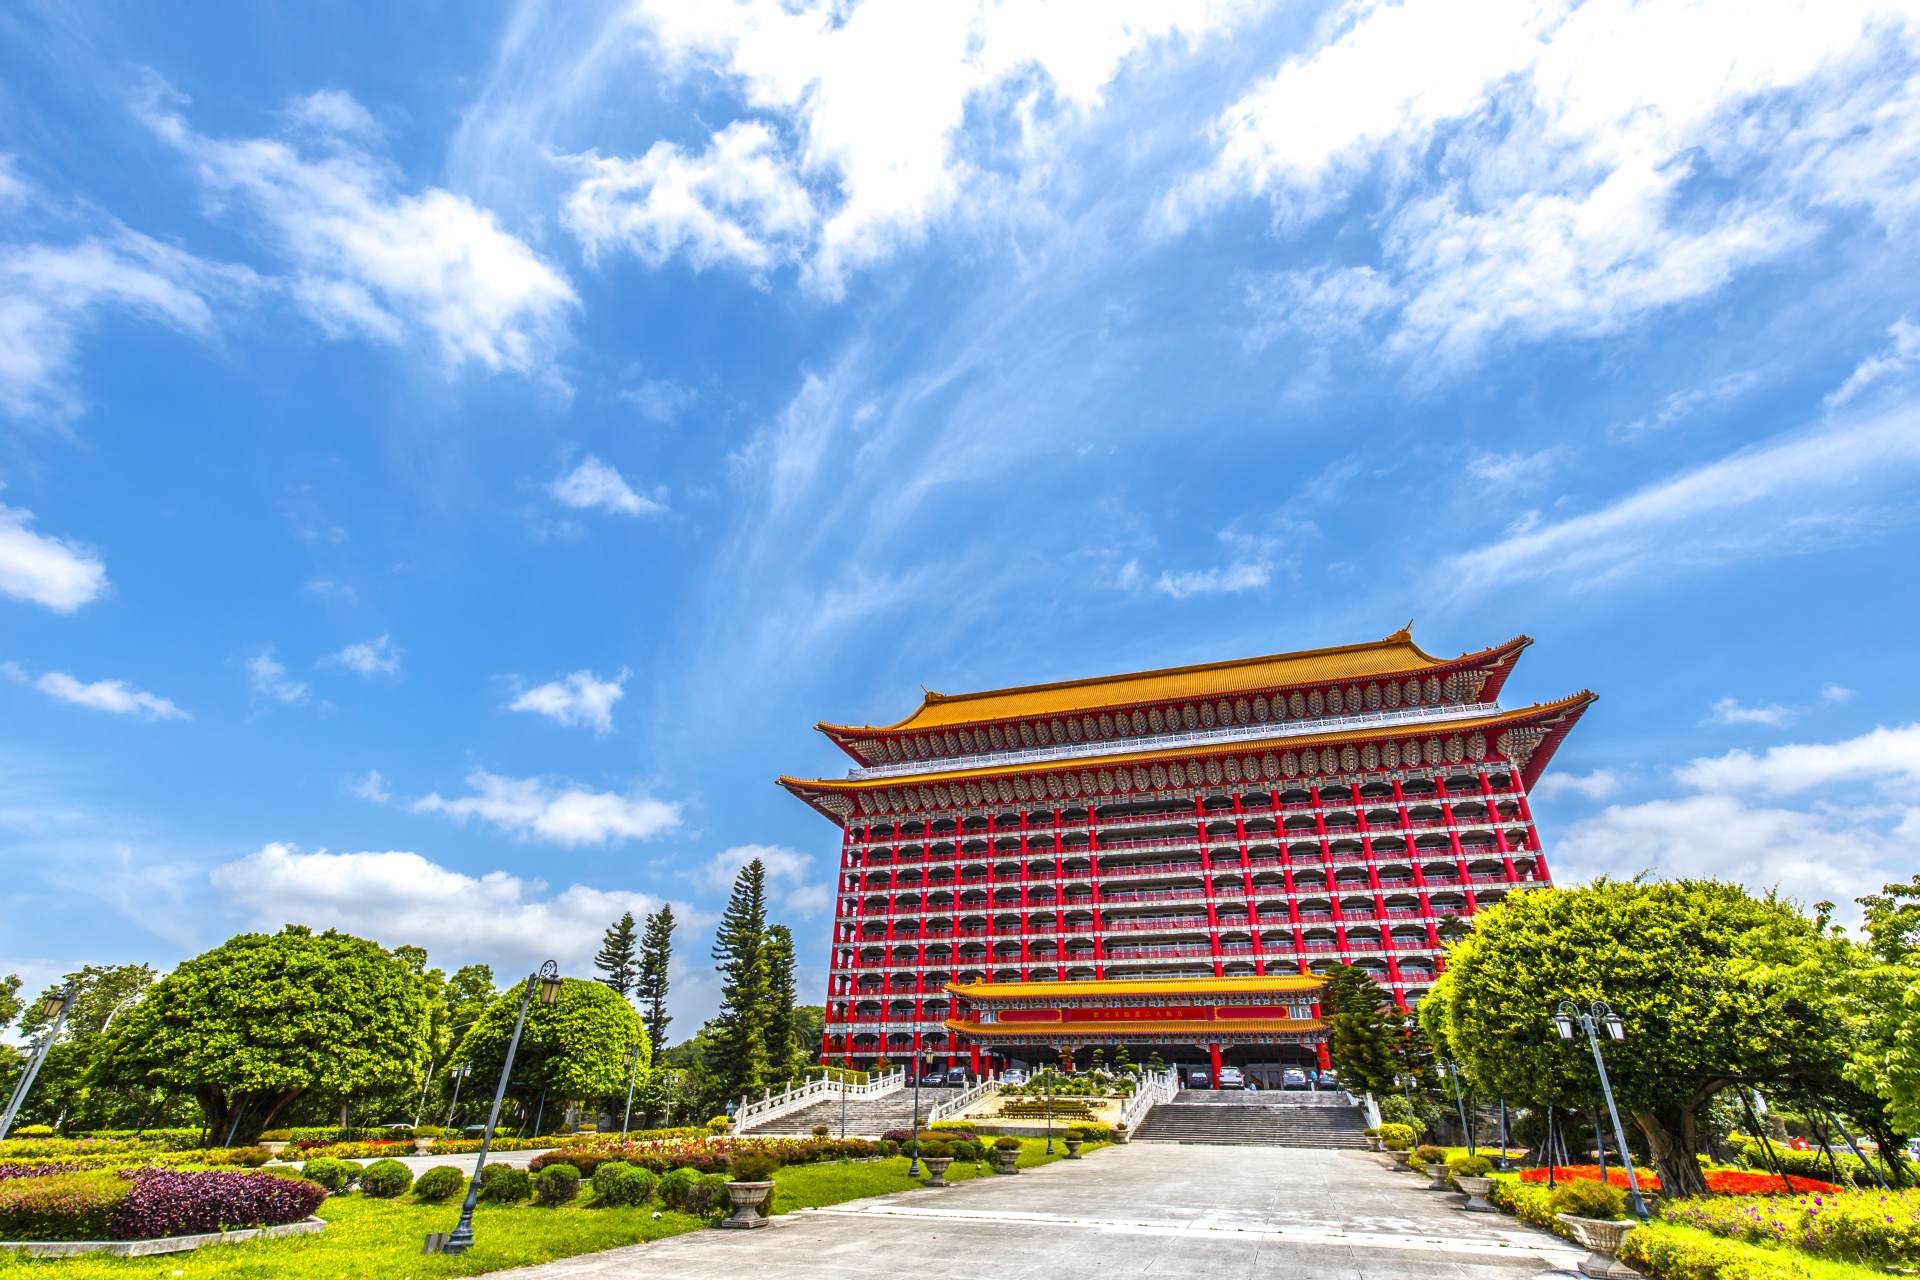  Tchaj-wan zajímavosti historie hotely 